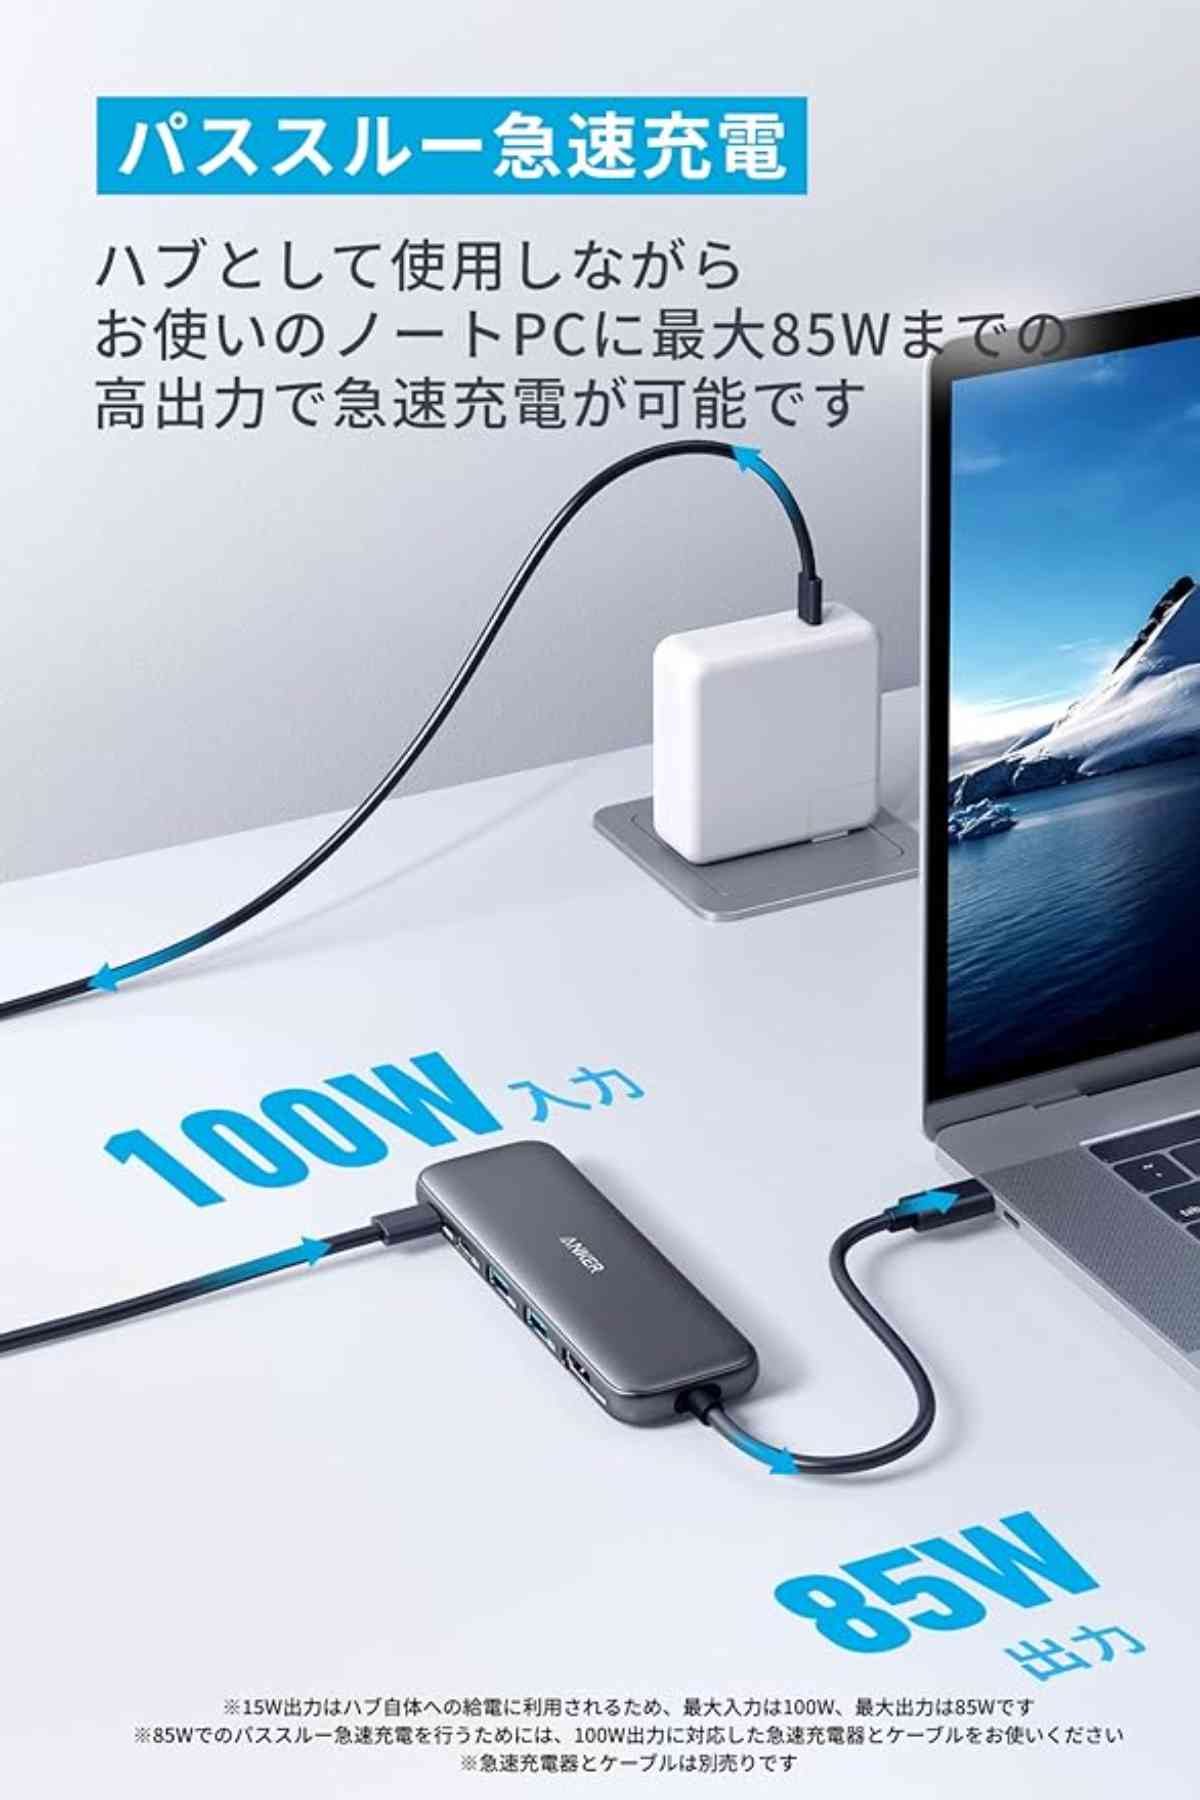 「Anker 332 USB-C ハブ (5-in-1)」 